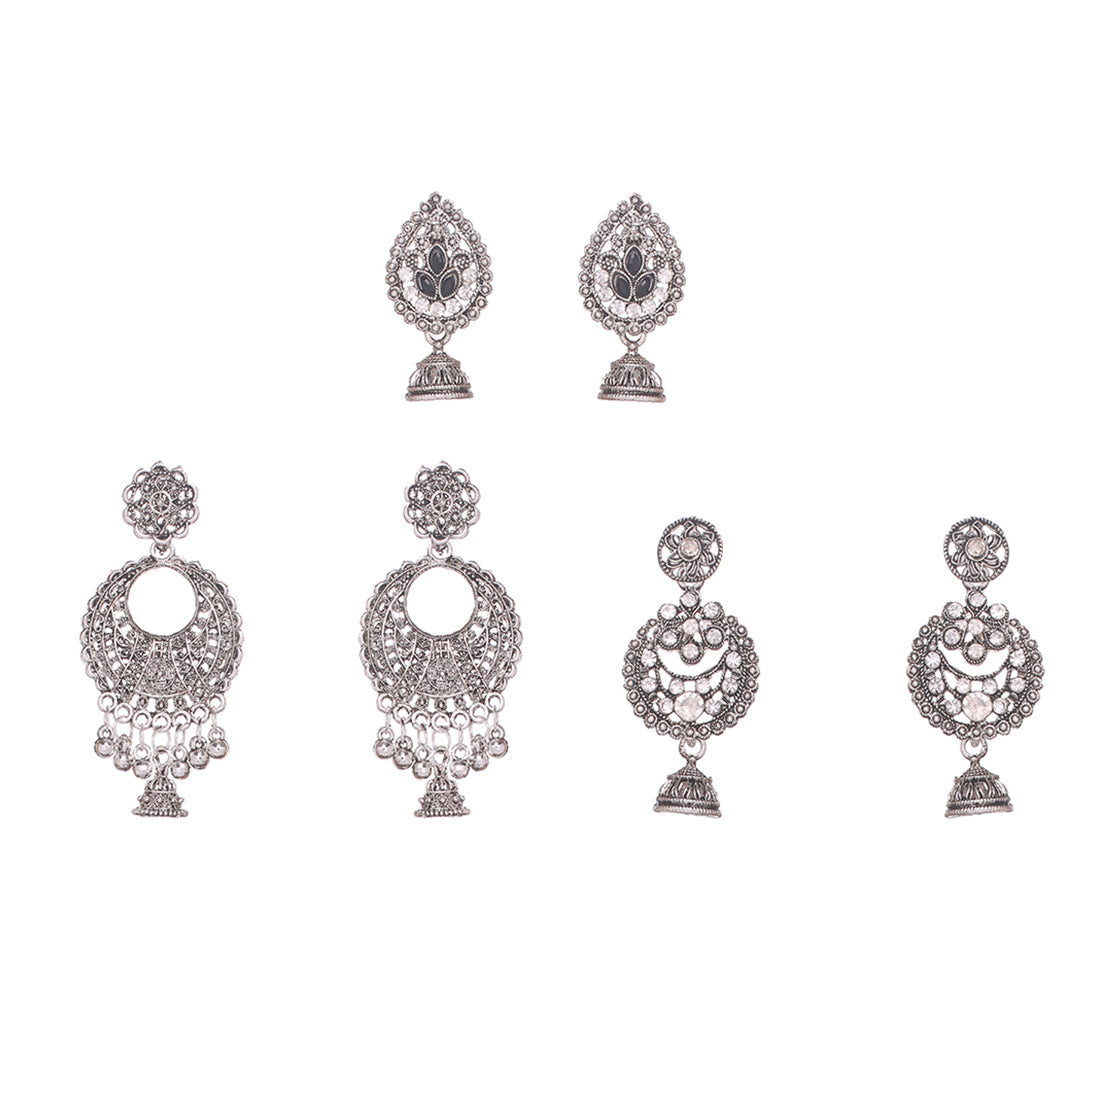 Set Of 3 Ethnic Silver Chambali Earrings With Small Jhumki Danglers